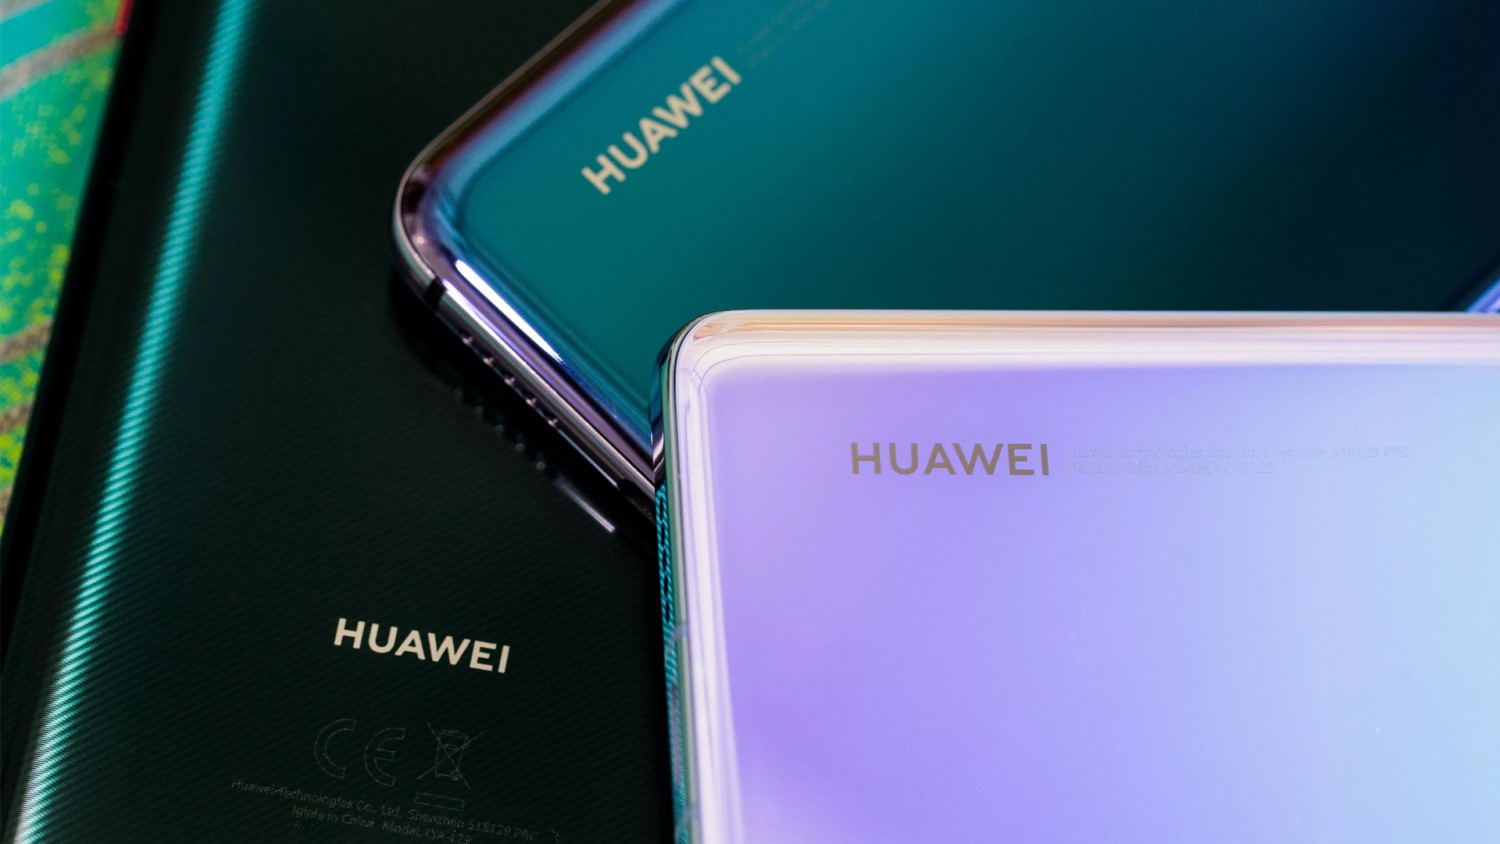 Huawei powrócił do SD Association i WI-Fi Alliance, a flagowy Mate 20 Pro - do beta testu  Android Q